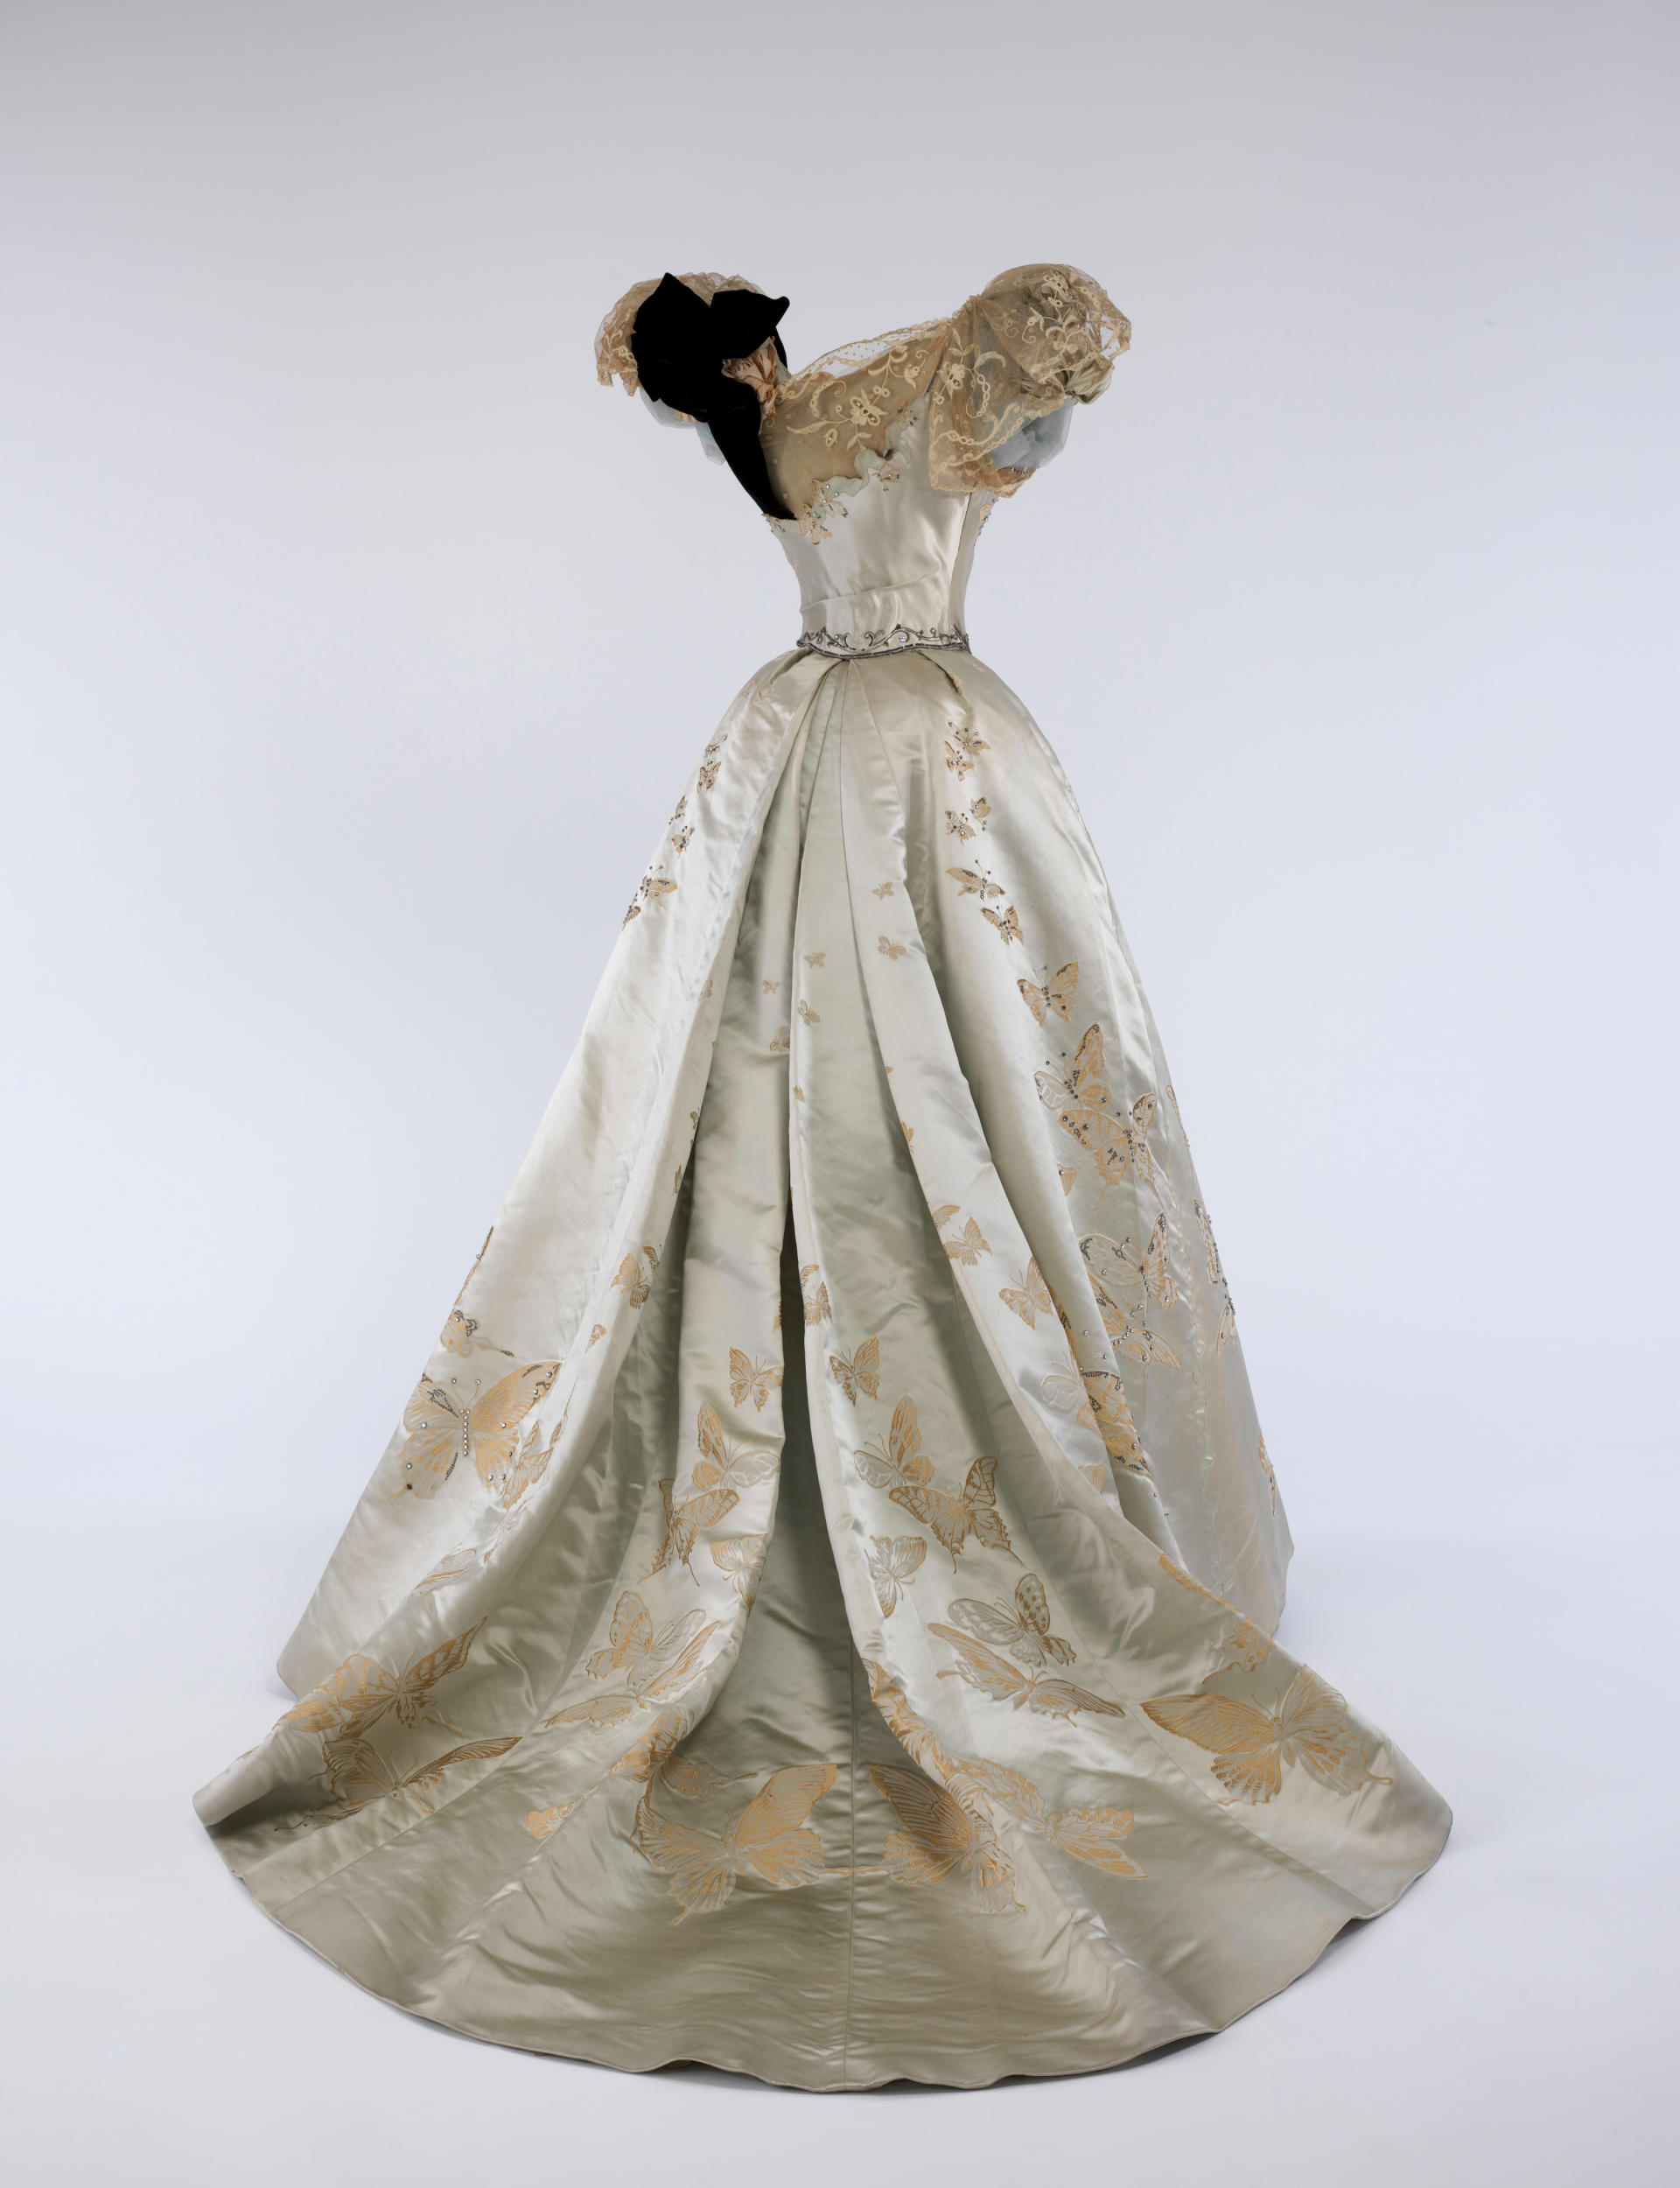 Платье по эскизу&nbsp;Жана Филиппа&nbsp;Ворта для модного дома&nbsp;House of Worth, 1898​
